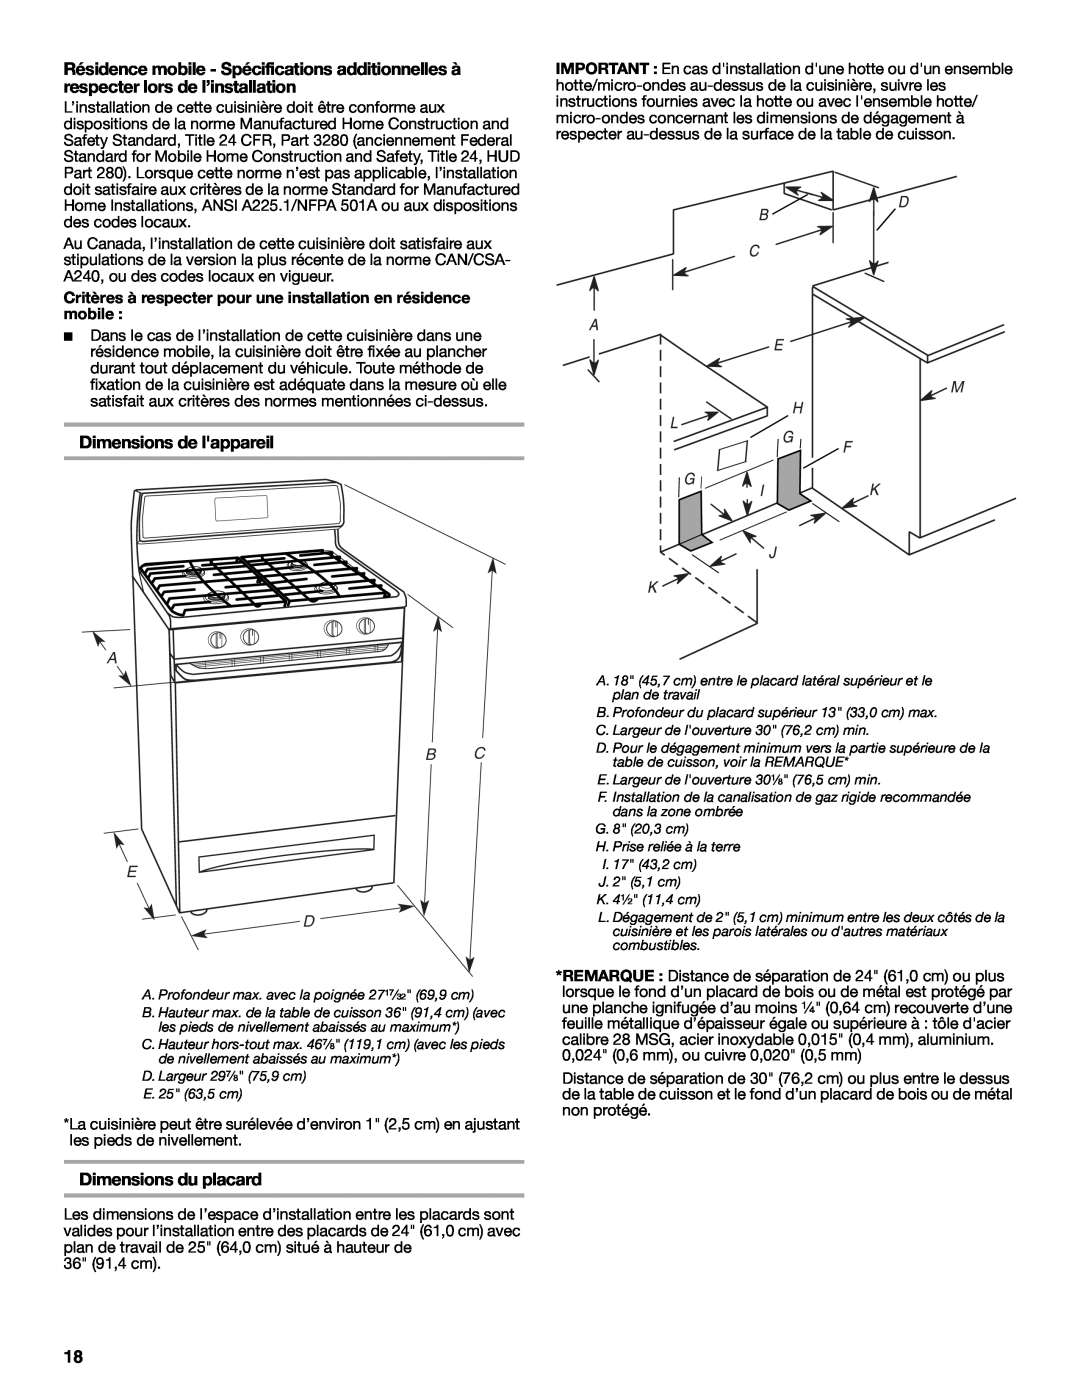 Whirlpool W10196160D installation instructions Dimensions de lappareil, Dimensions du placard, A Bc E D 